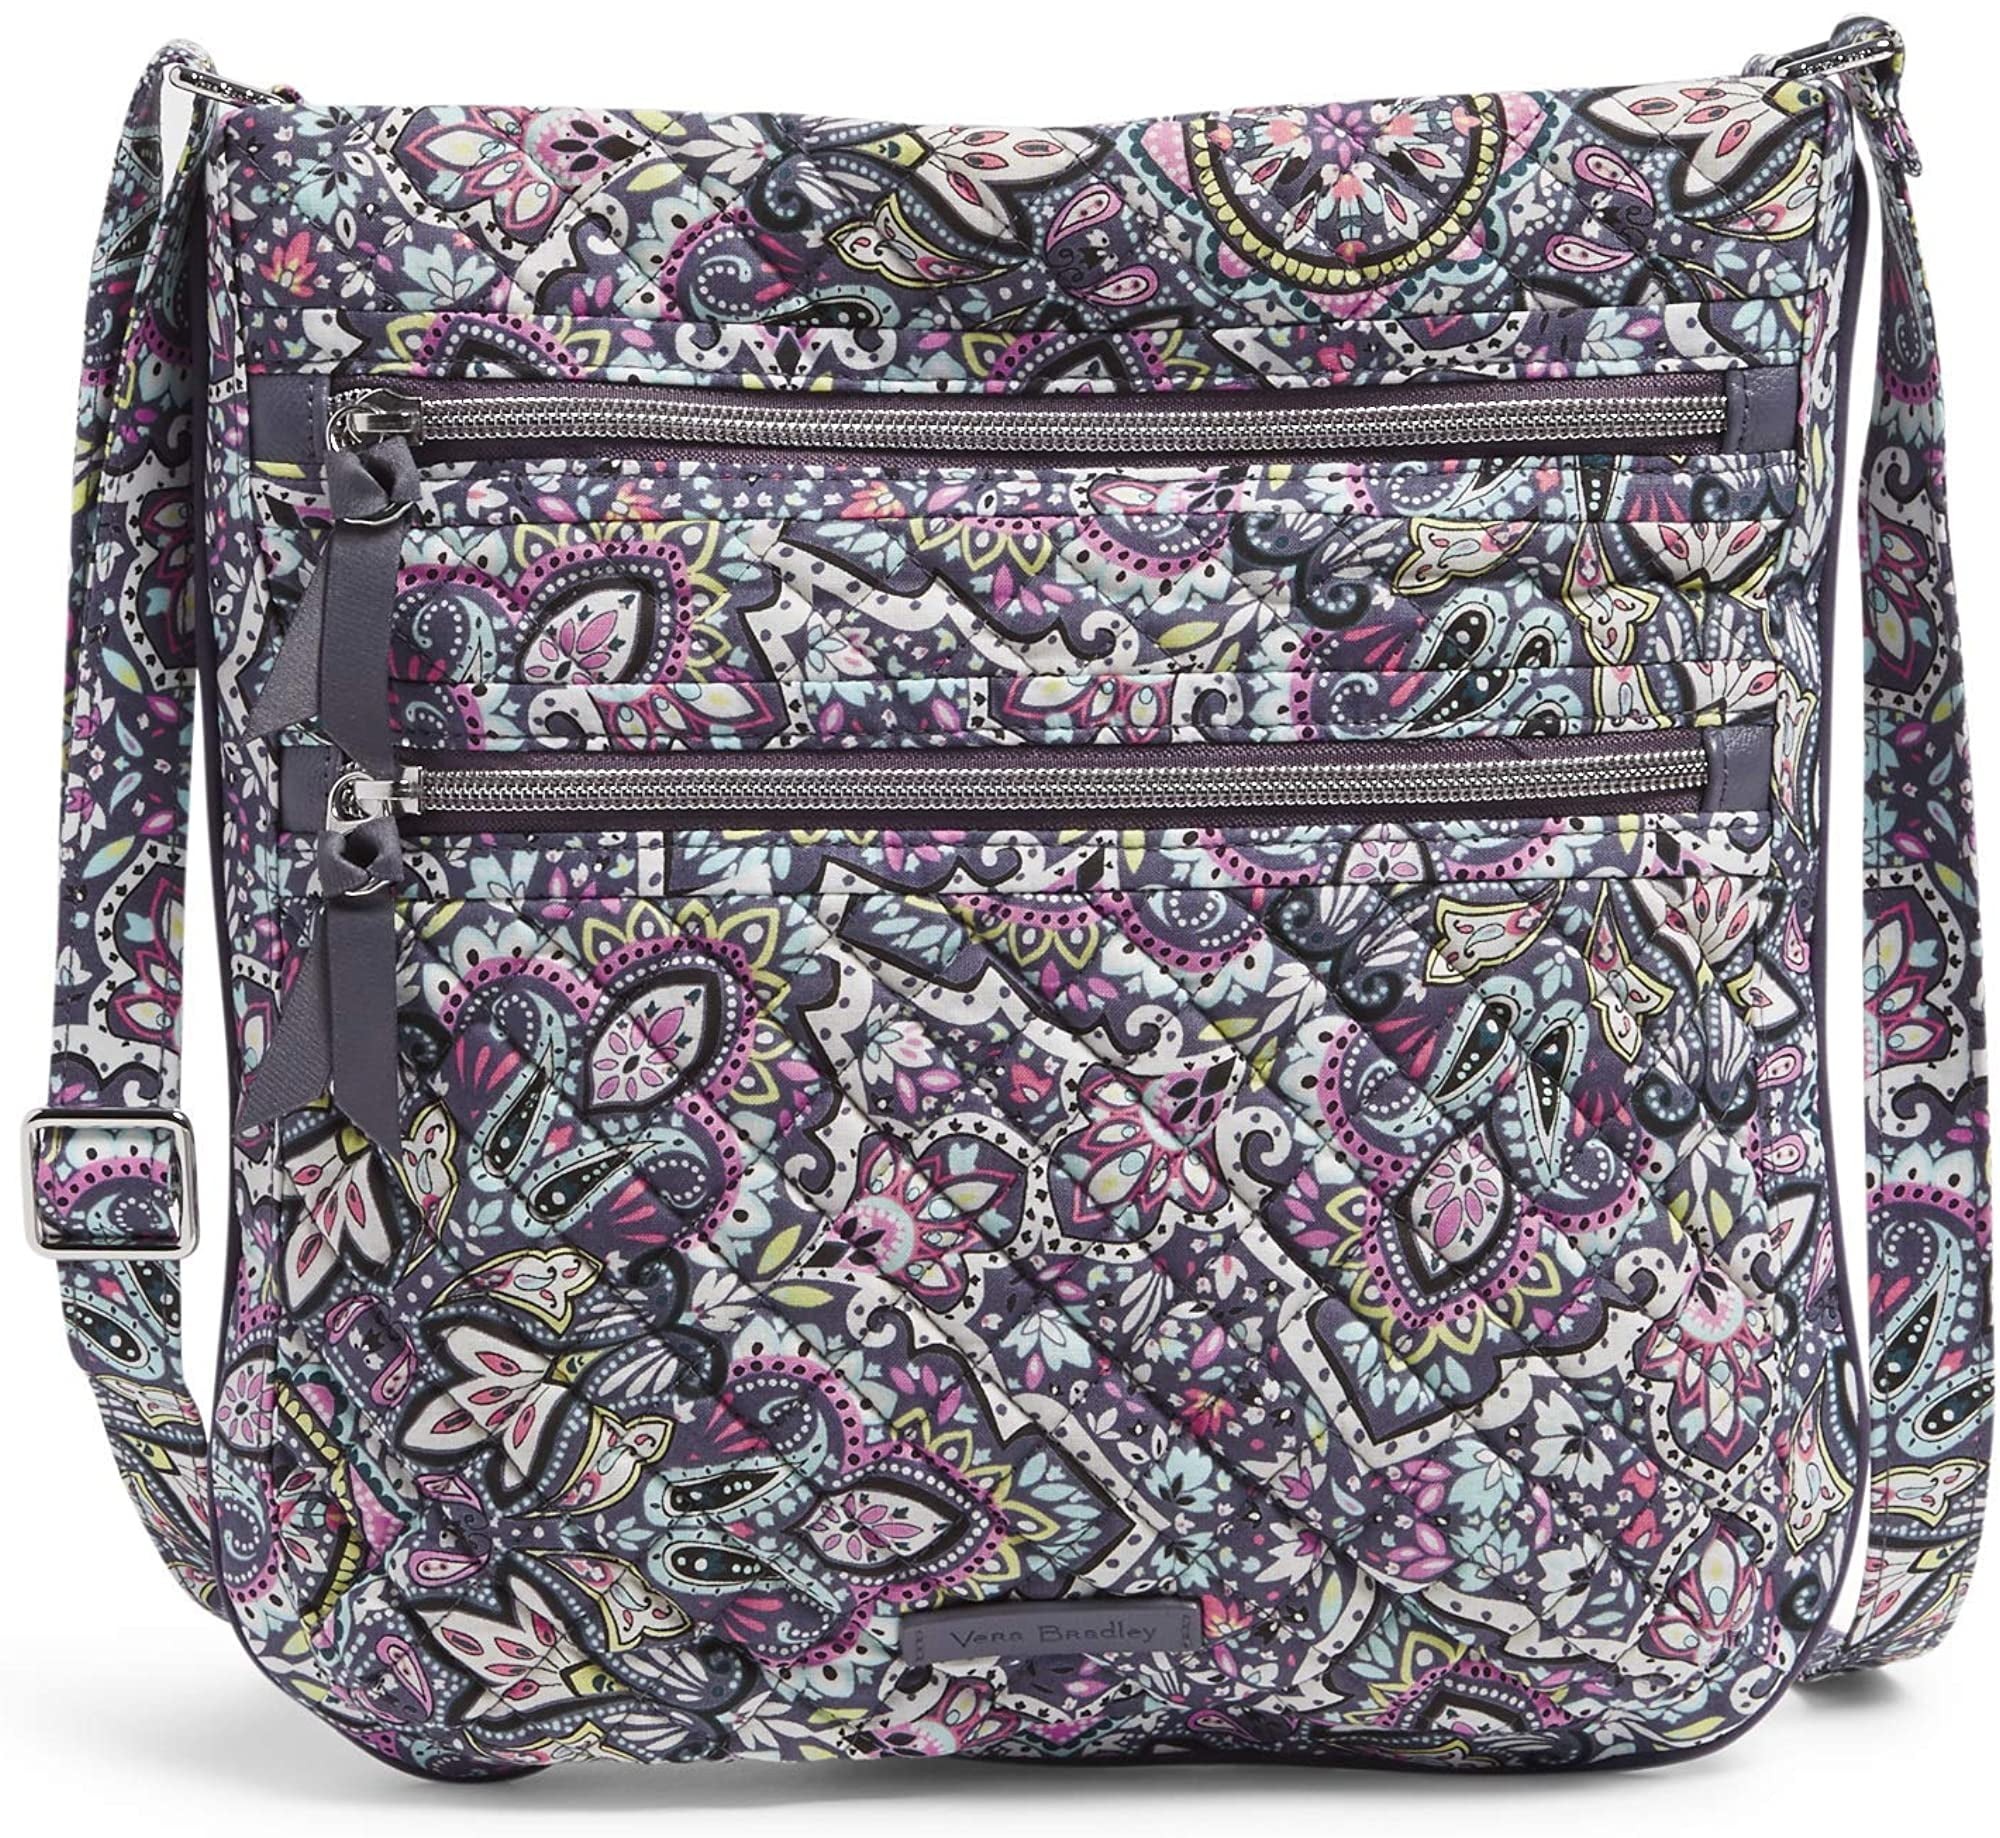 Vera Bradley Crossbody Purse VBG17 lavender pink teal green blue pockets  zippers | eBay